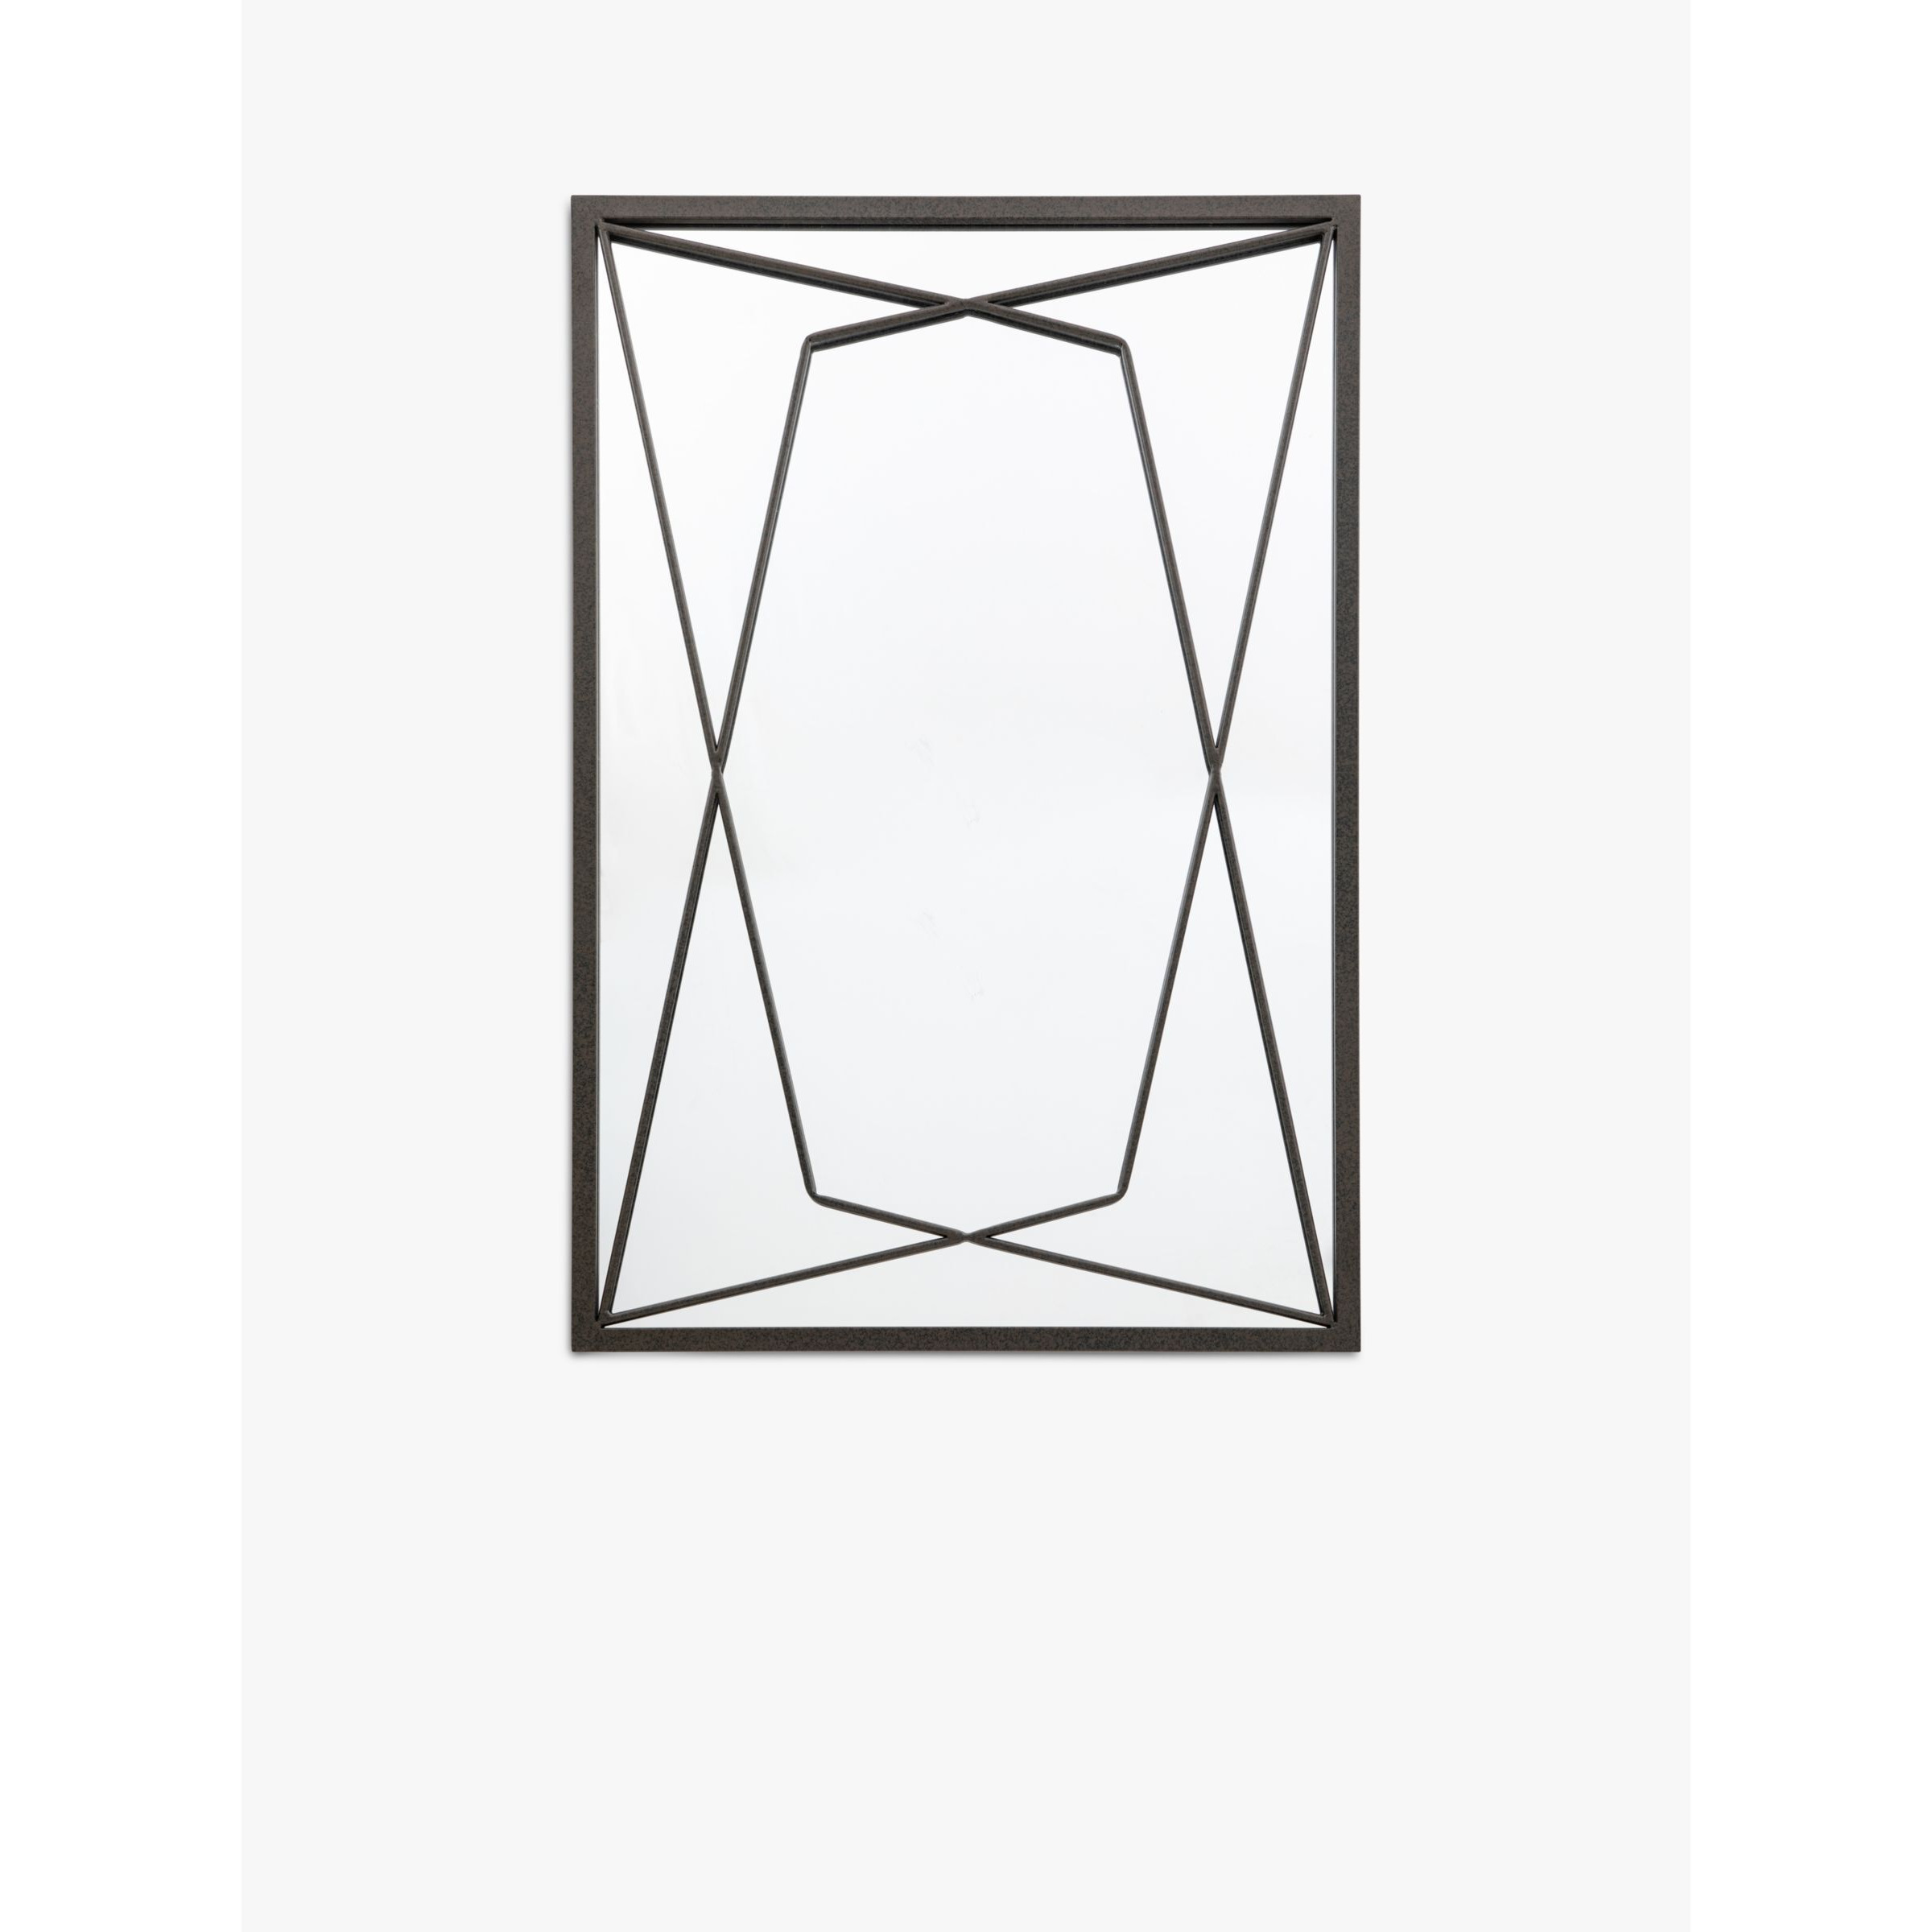 Gallery Direct Thurrock Rectangular Metal Frame Wall Mirror, 95 x 65cm, Black - image 1